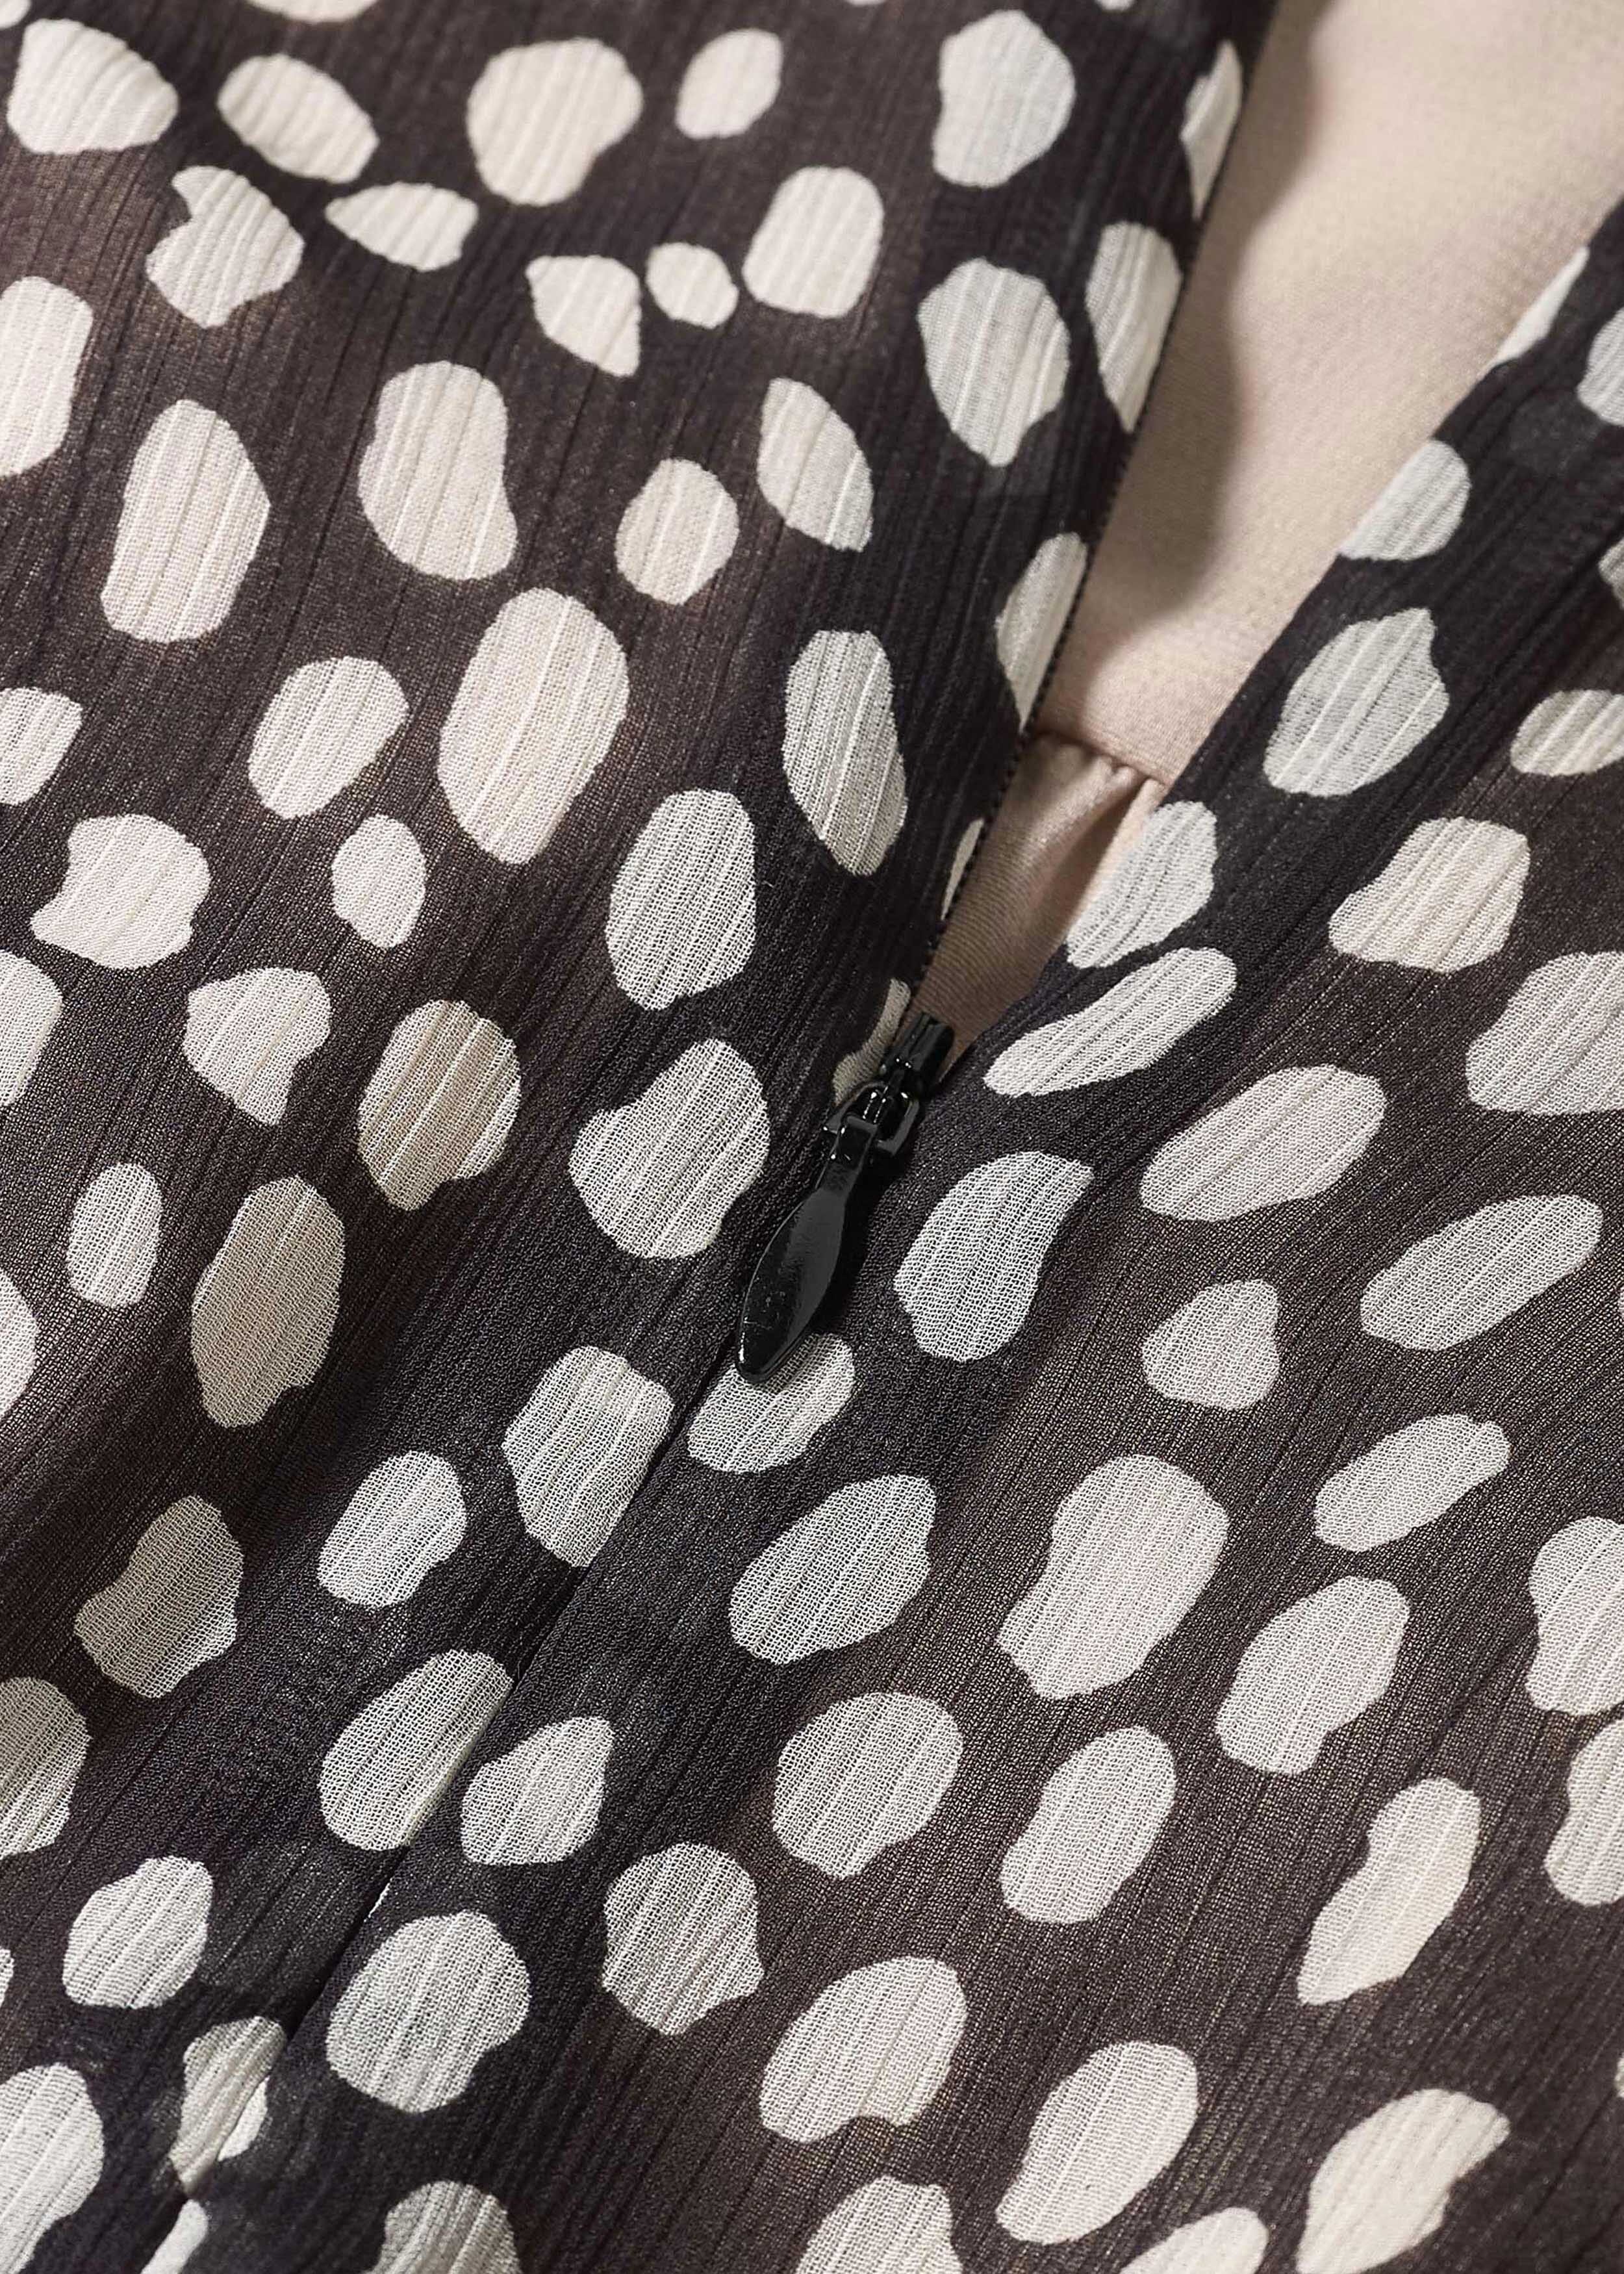 Large Dot Feminine Blouse + Tie Black/White